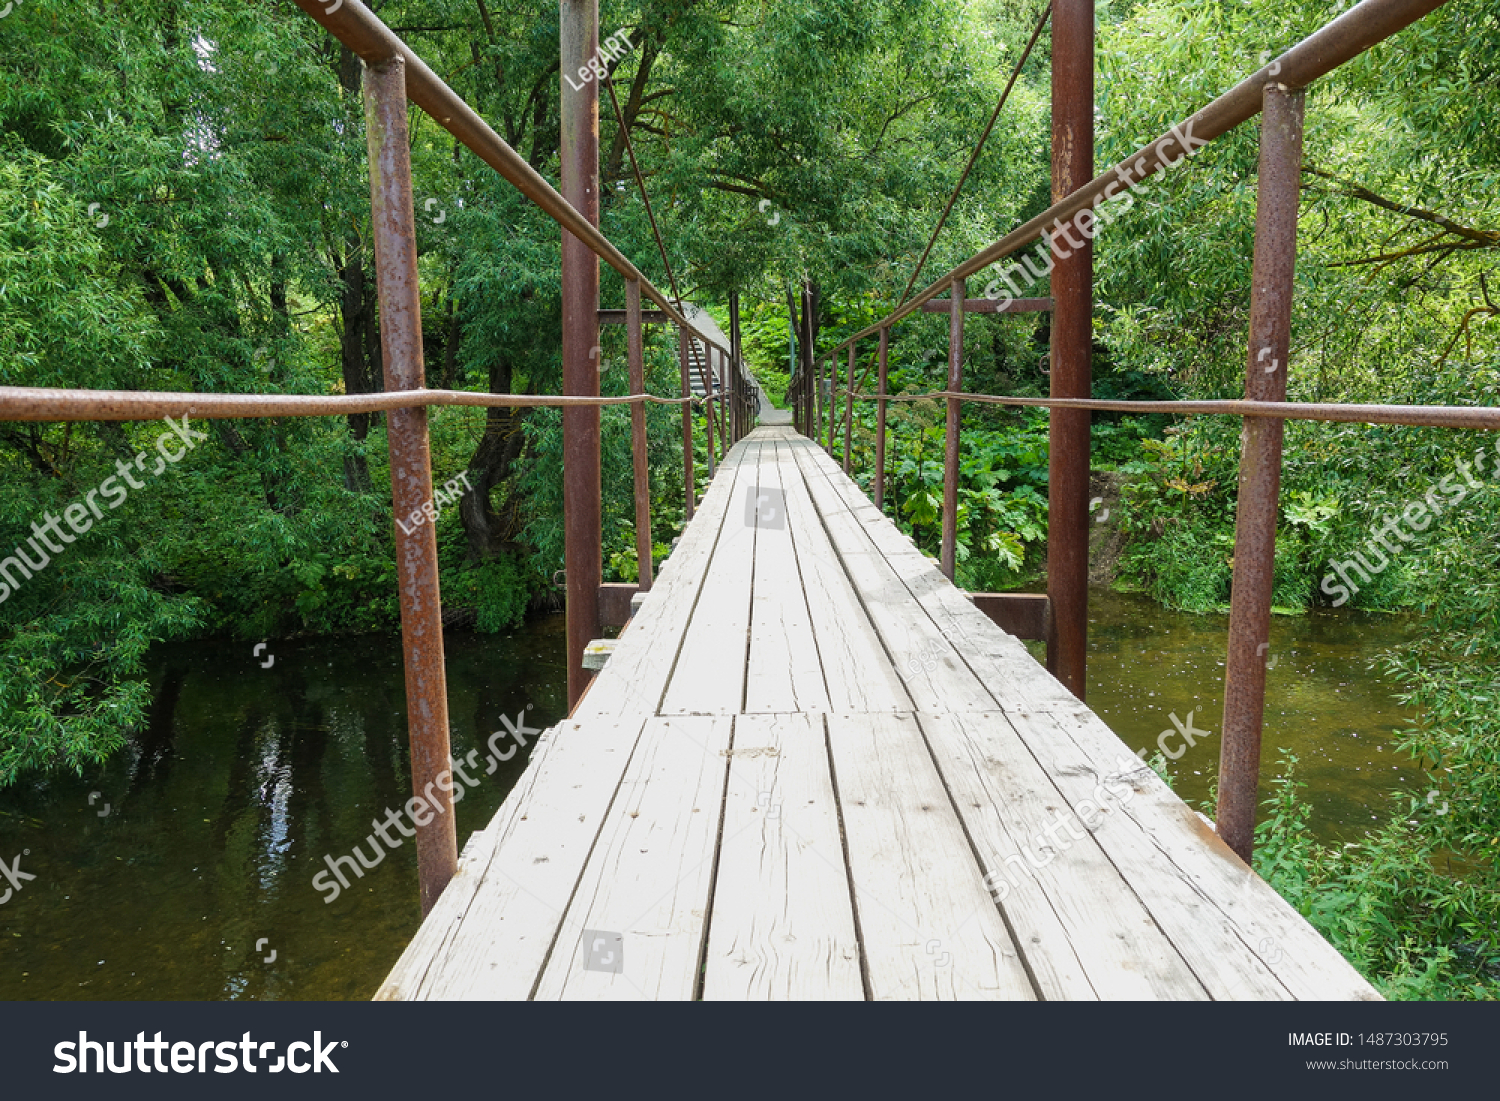 Suspension bridge, Crossing the river, ferriage in the woods #1487303795